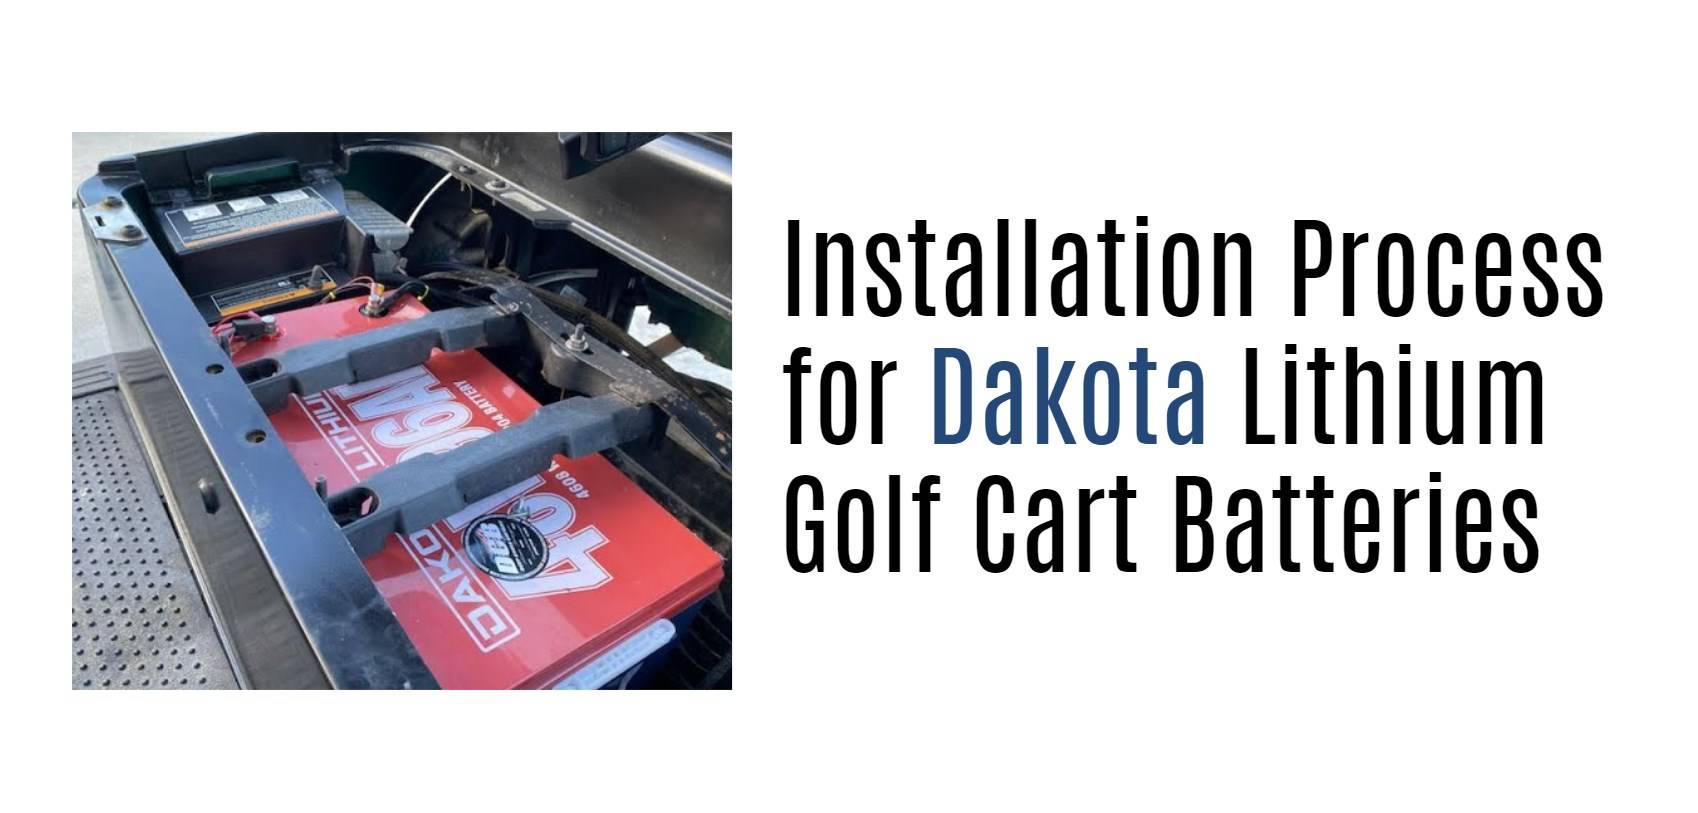 Installation Process for Dakota Lithium Golf Cart Batteries